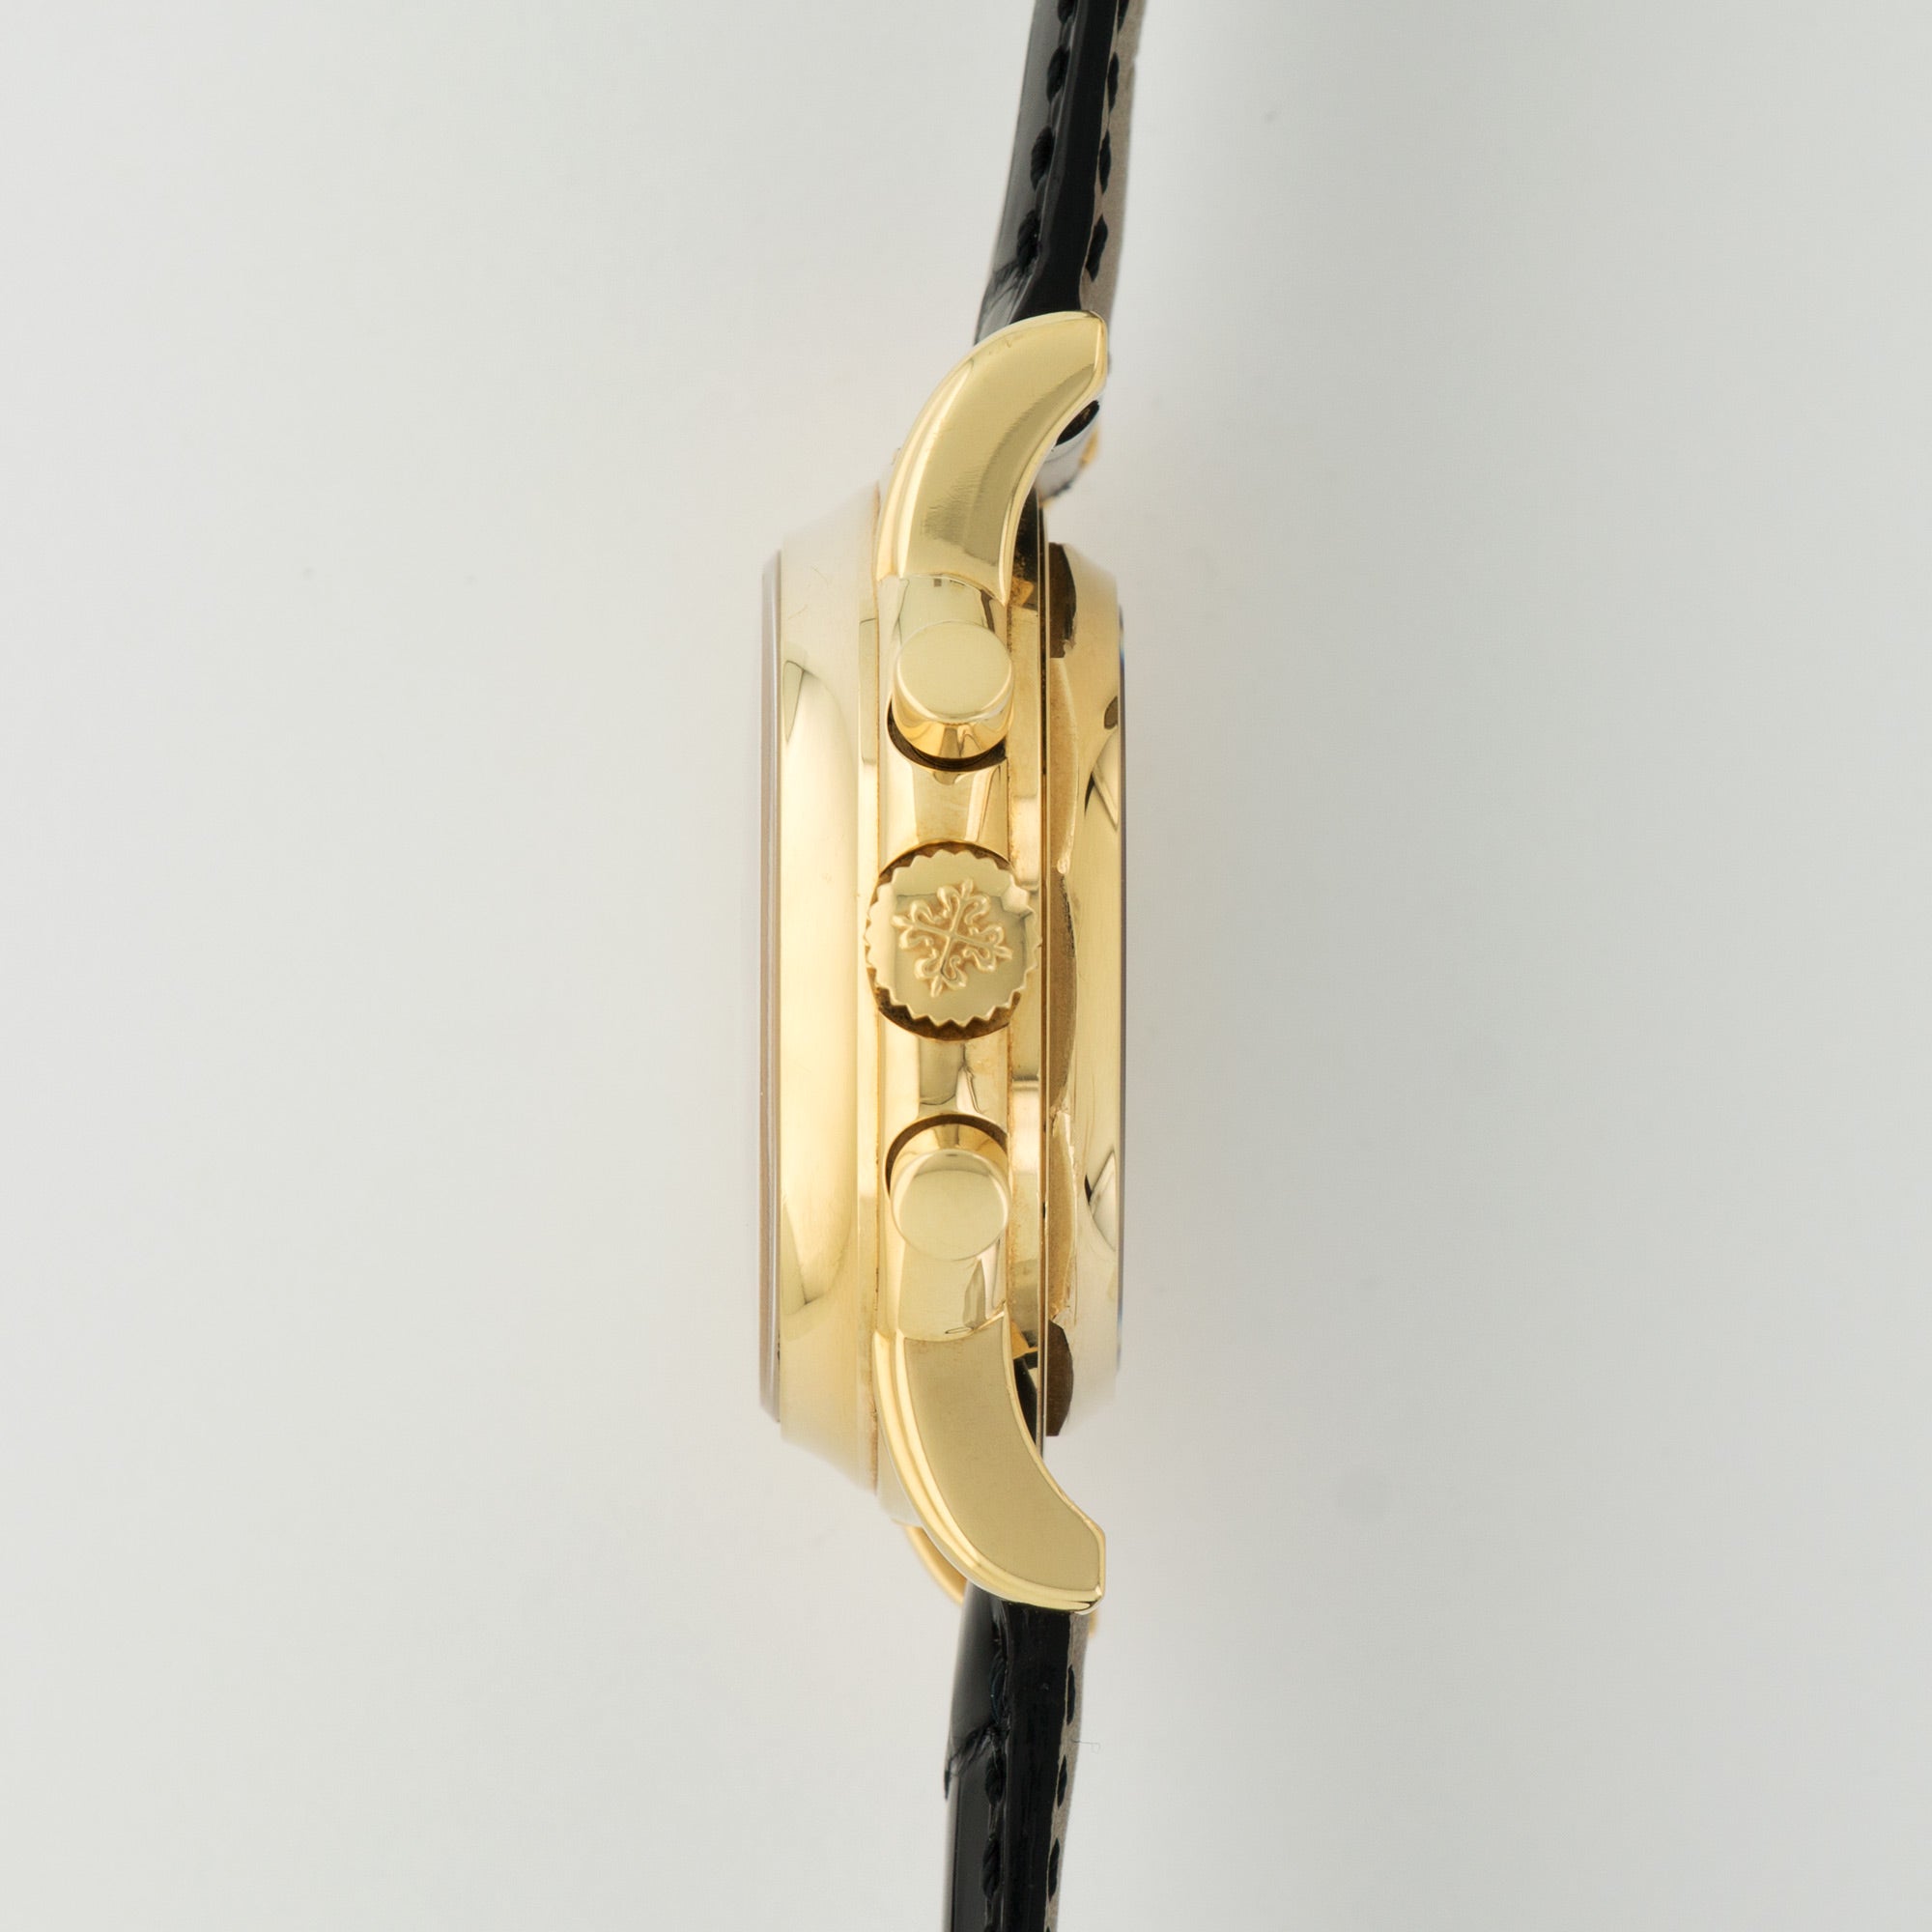 Patek Philippe - Patek Philippe Yellow Gold Perpetual Calendar Chrono Watch Ref. 3970 - The Keystone Watches